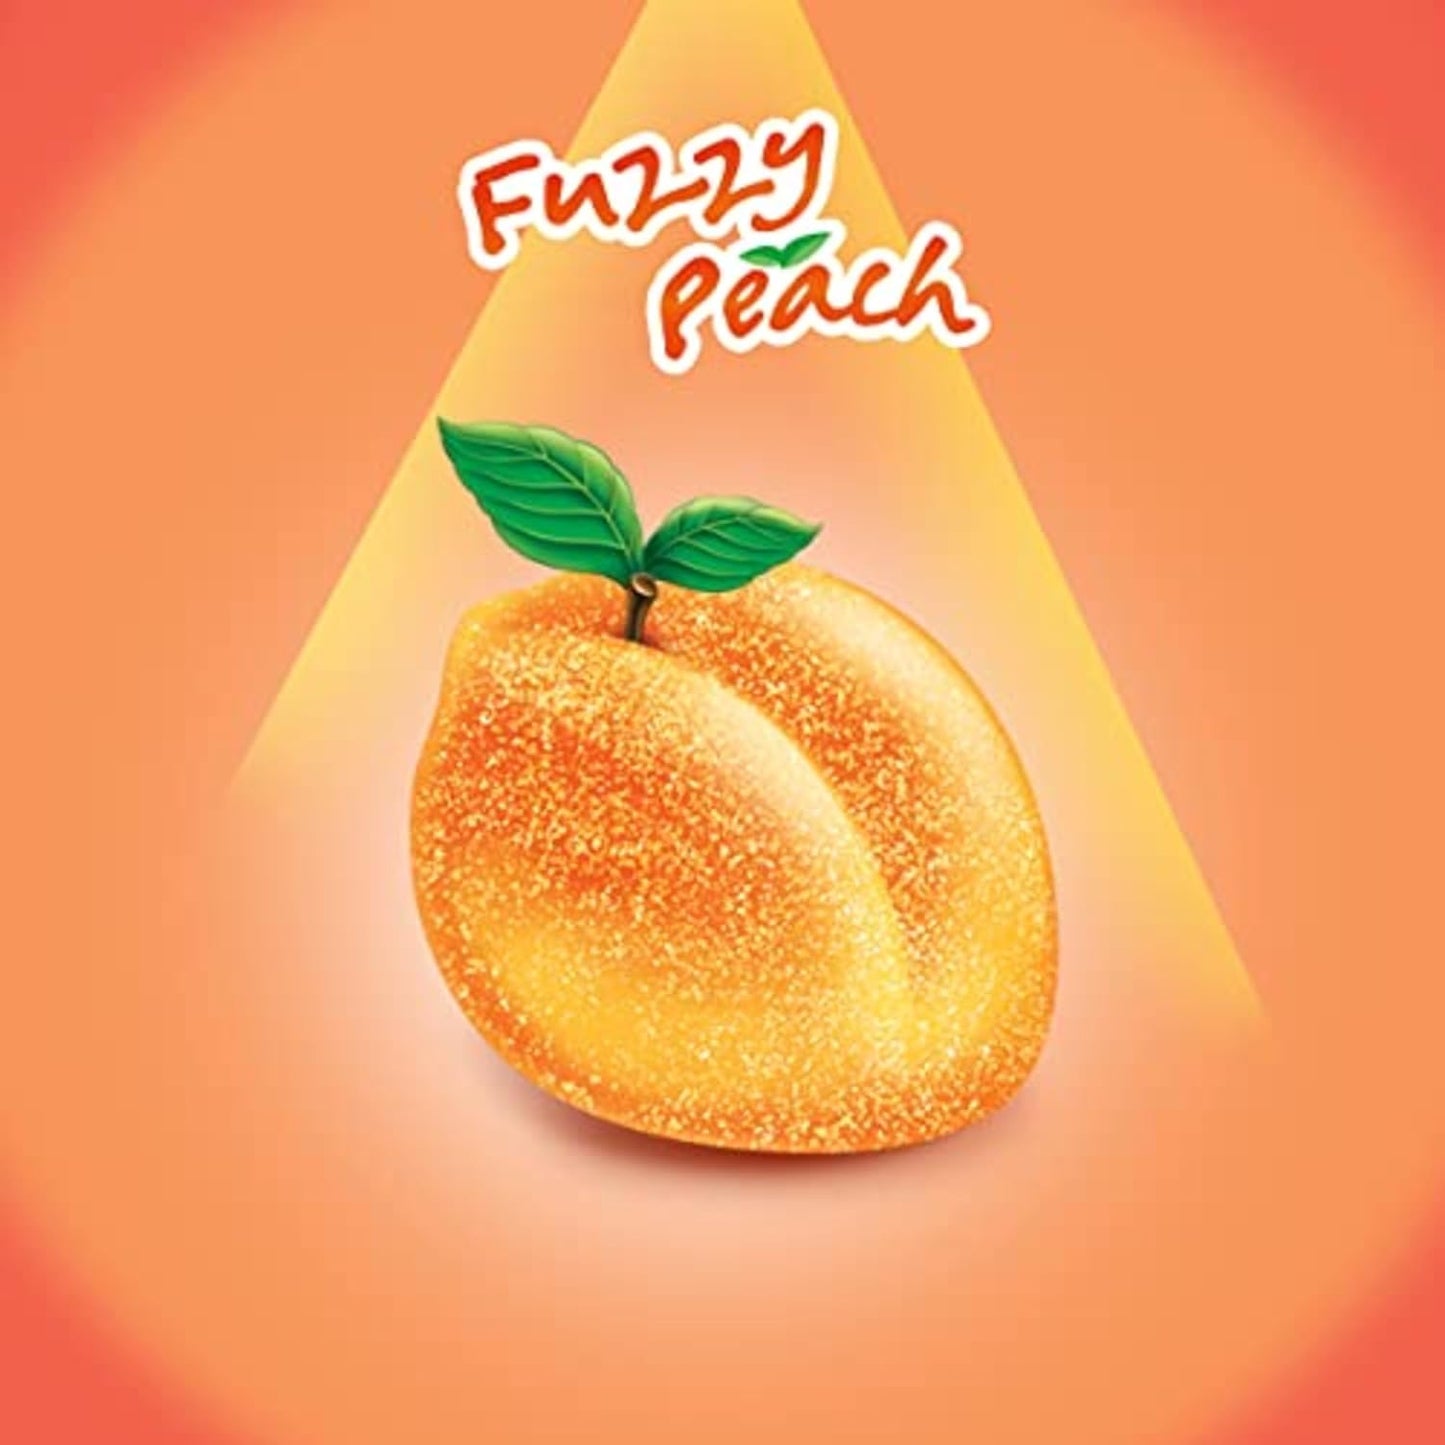 Maynards Fuzzy Peach Candy - Wholesale